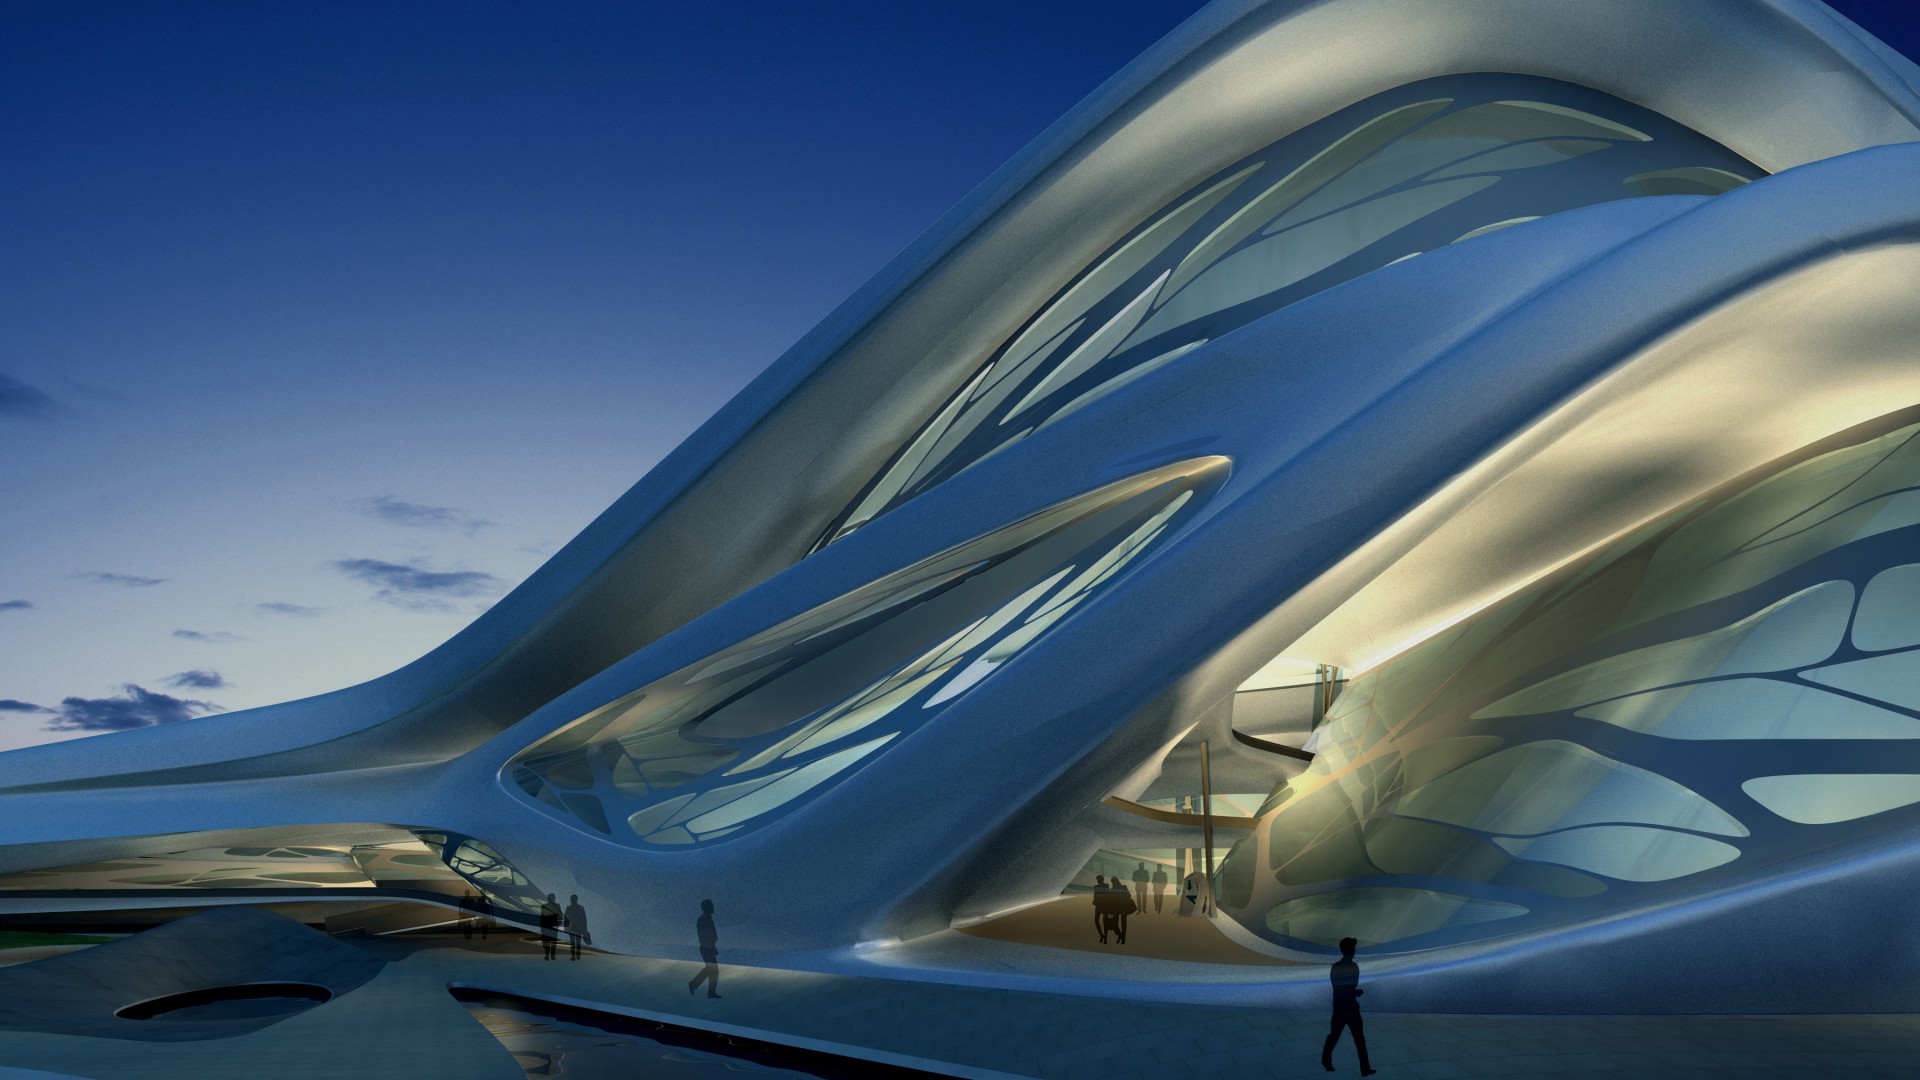 Абу Даби Арт Центр, ОАЭ, стекло, Abu Dhabi Performing Arts Center, UAE, tourism, travel, steel, glass (horizontal)